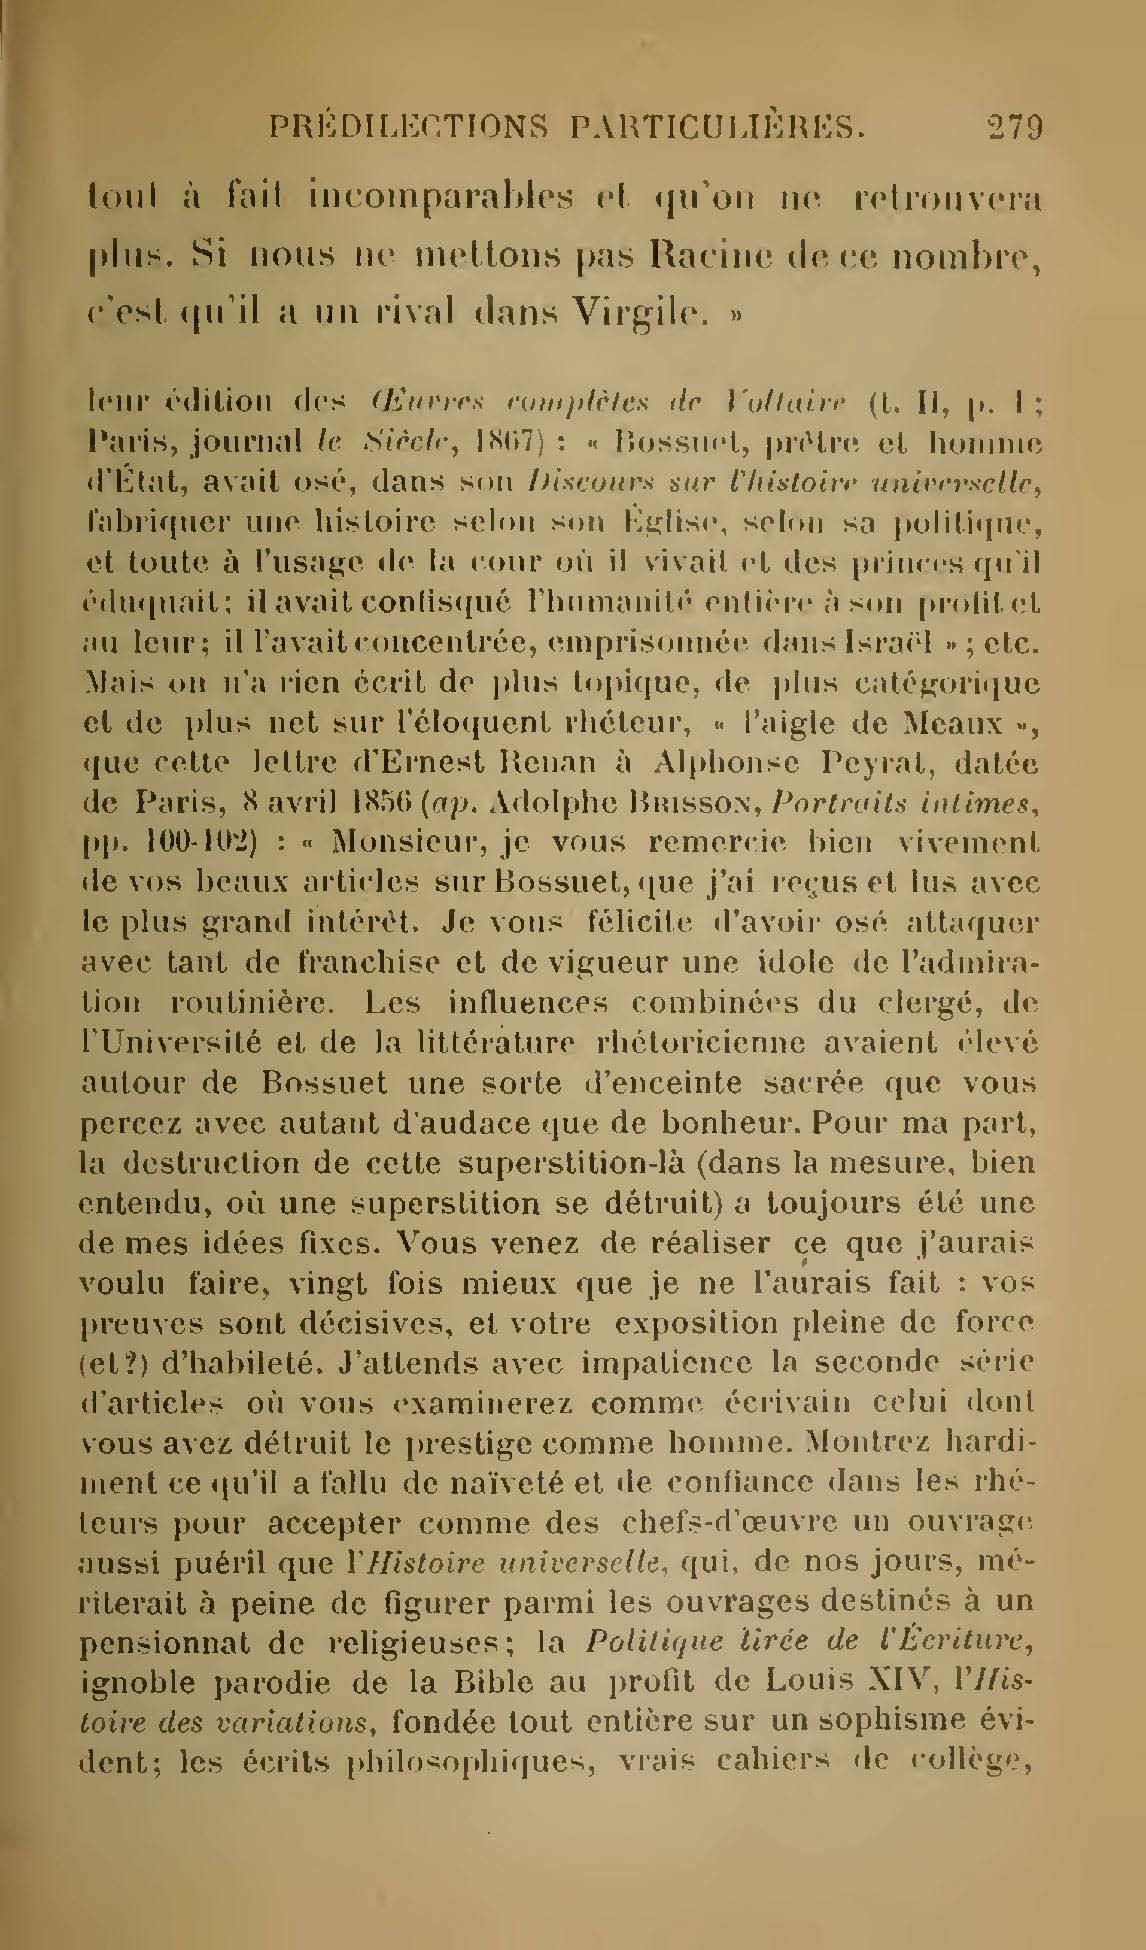 Albert Cim, Le Livre, t. I, p. 279.